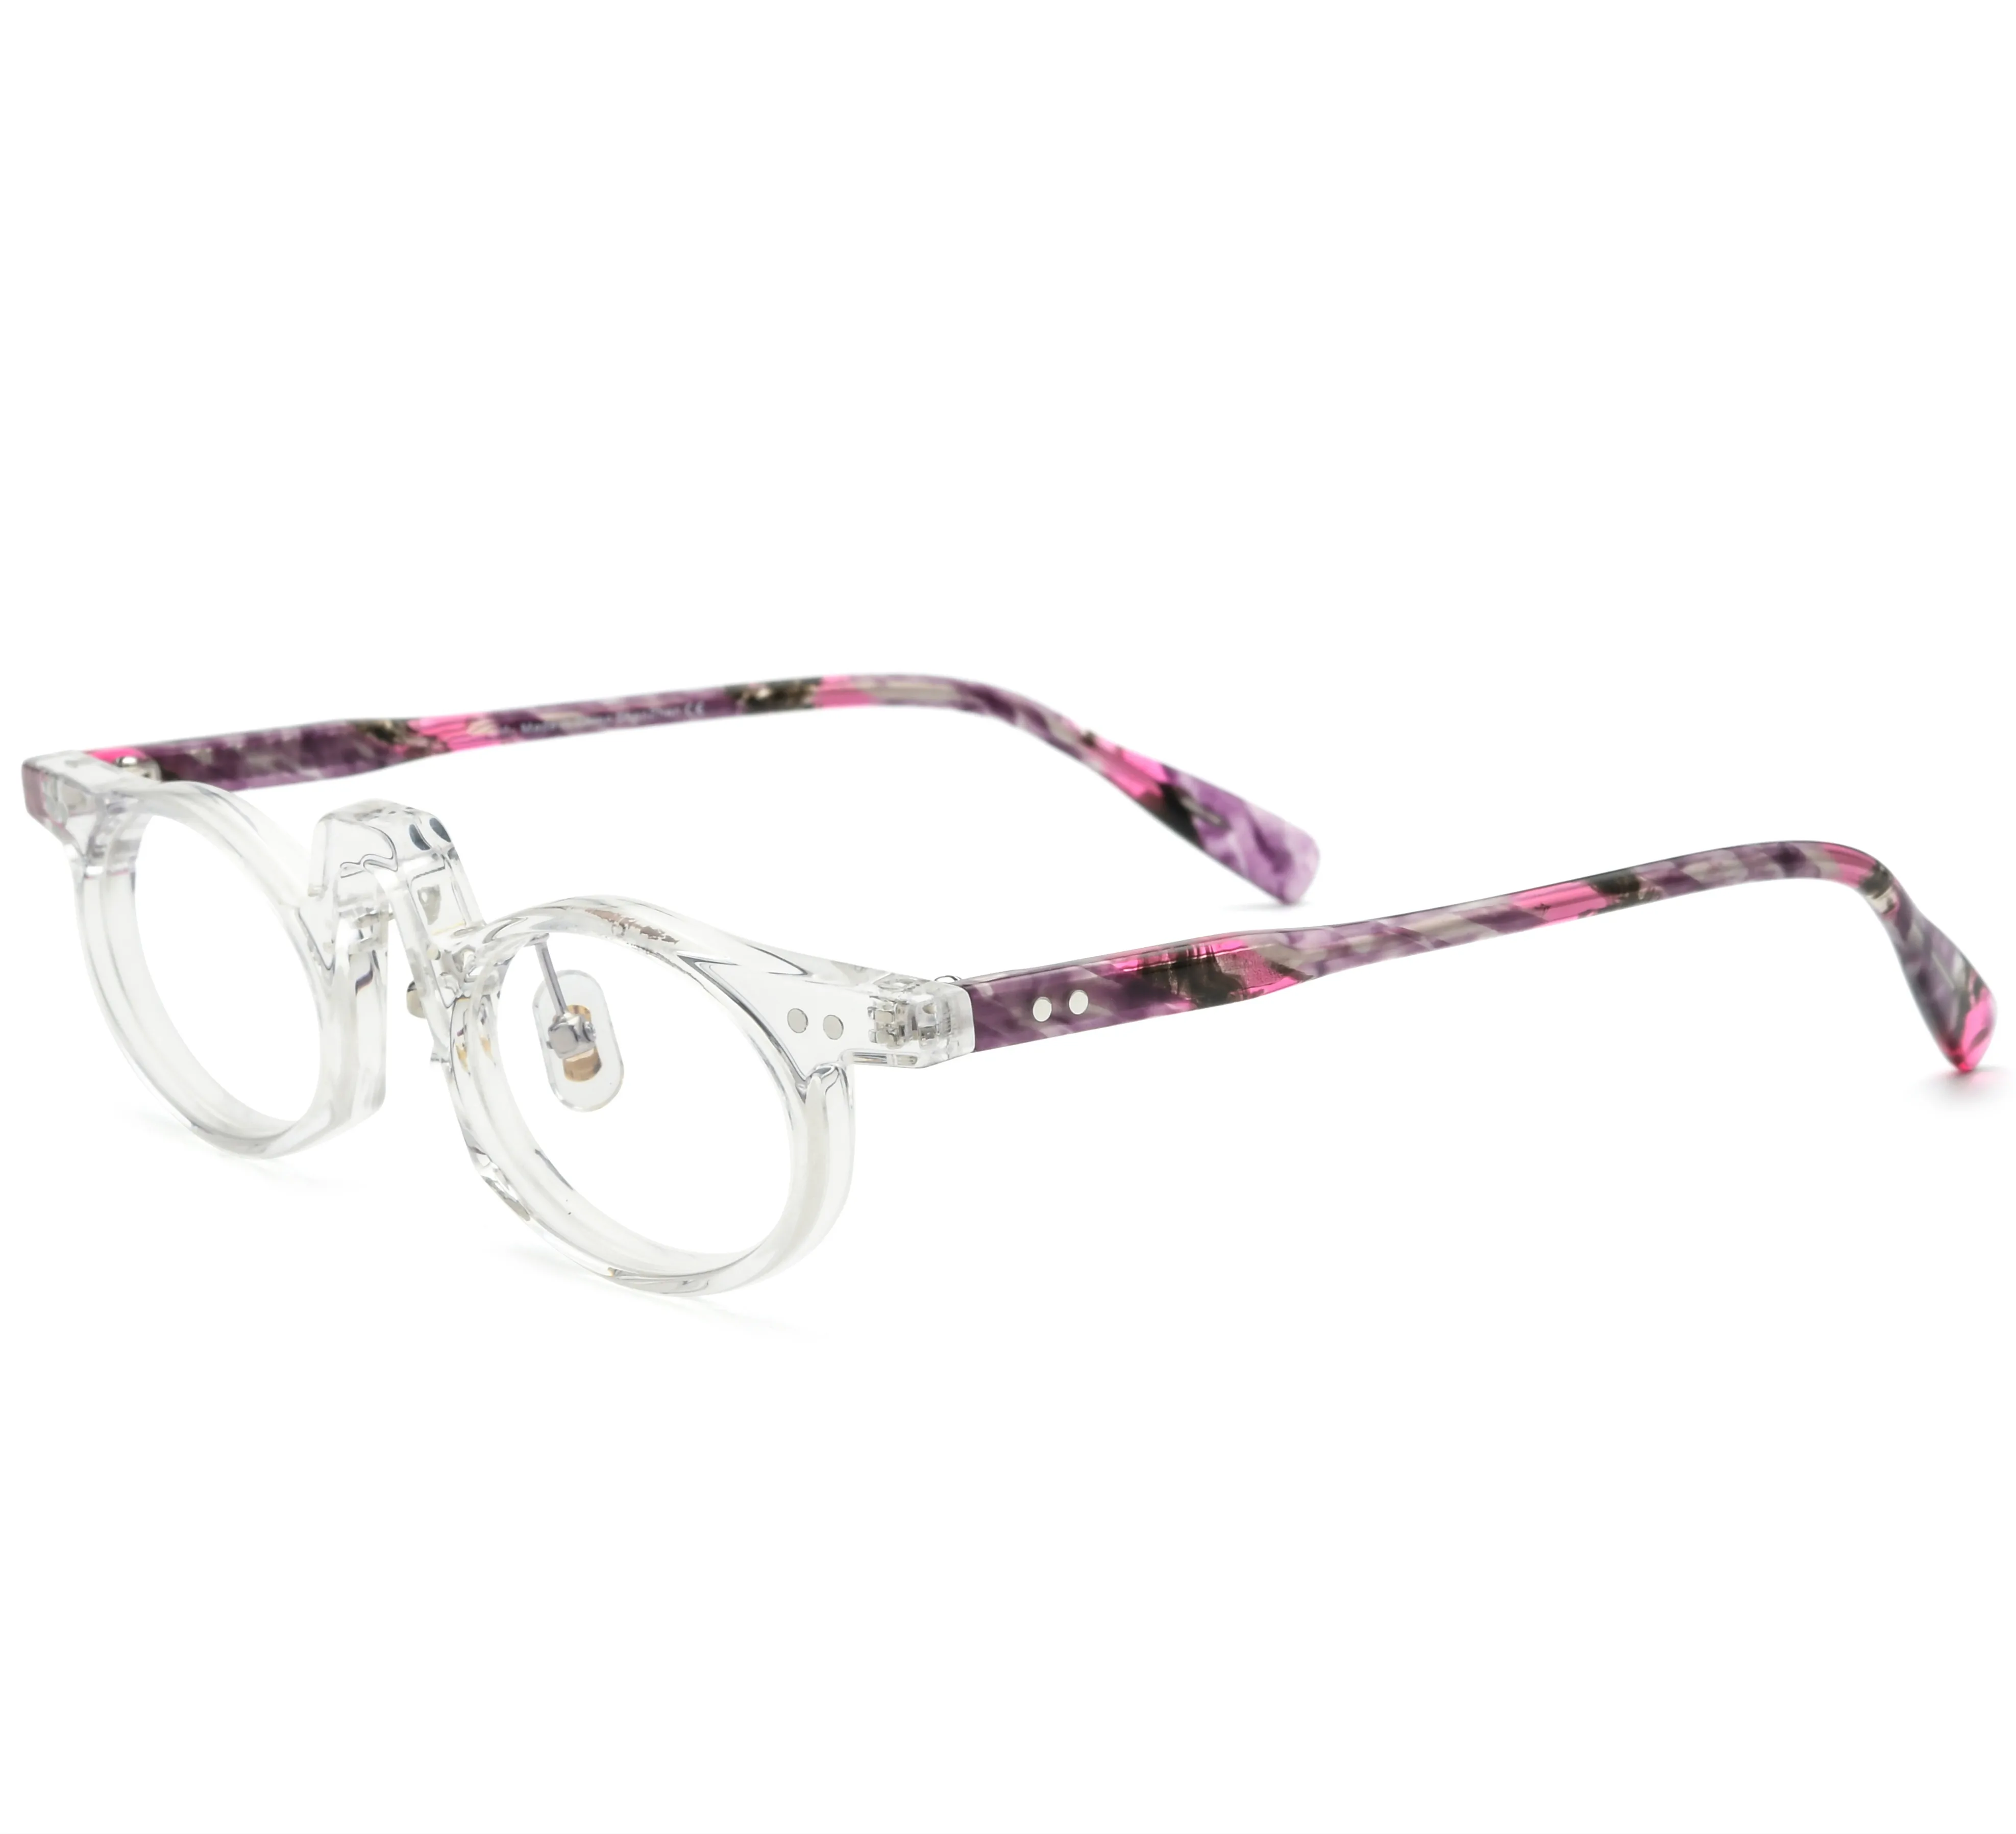 Shiny tortoiseshell color stitched glasses frame